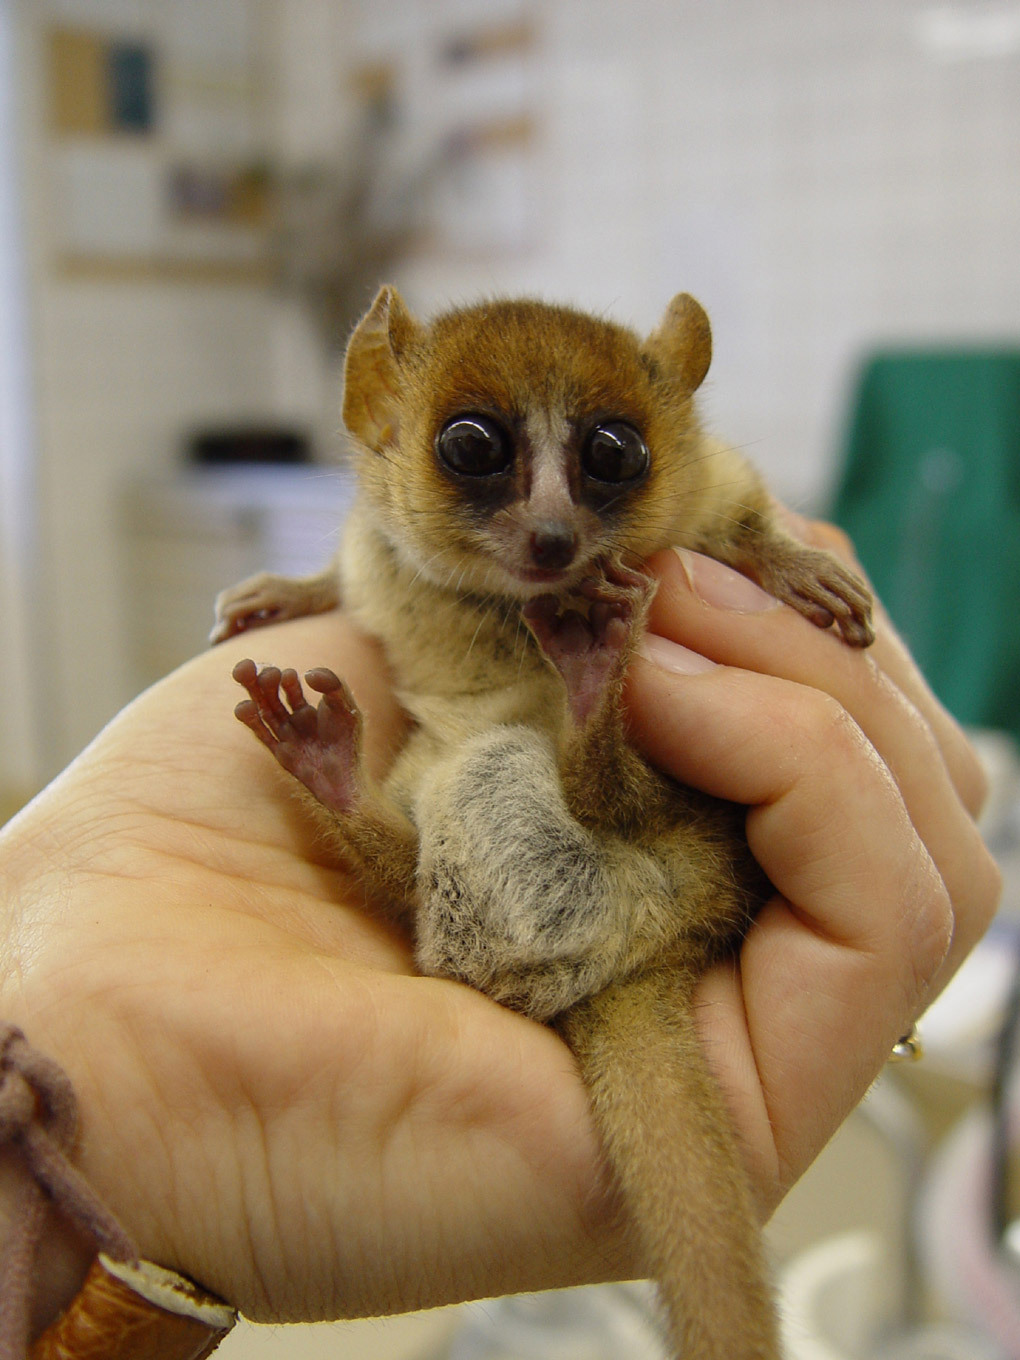 Baby Lemurs